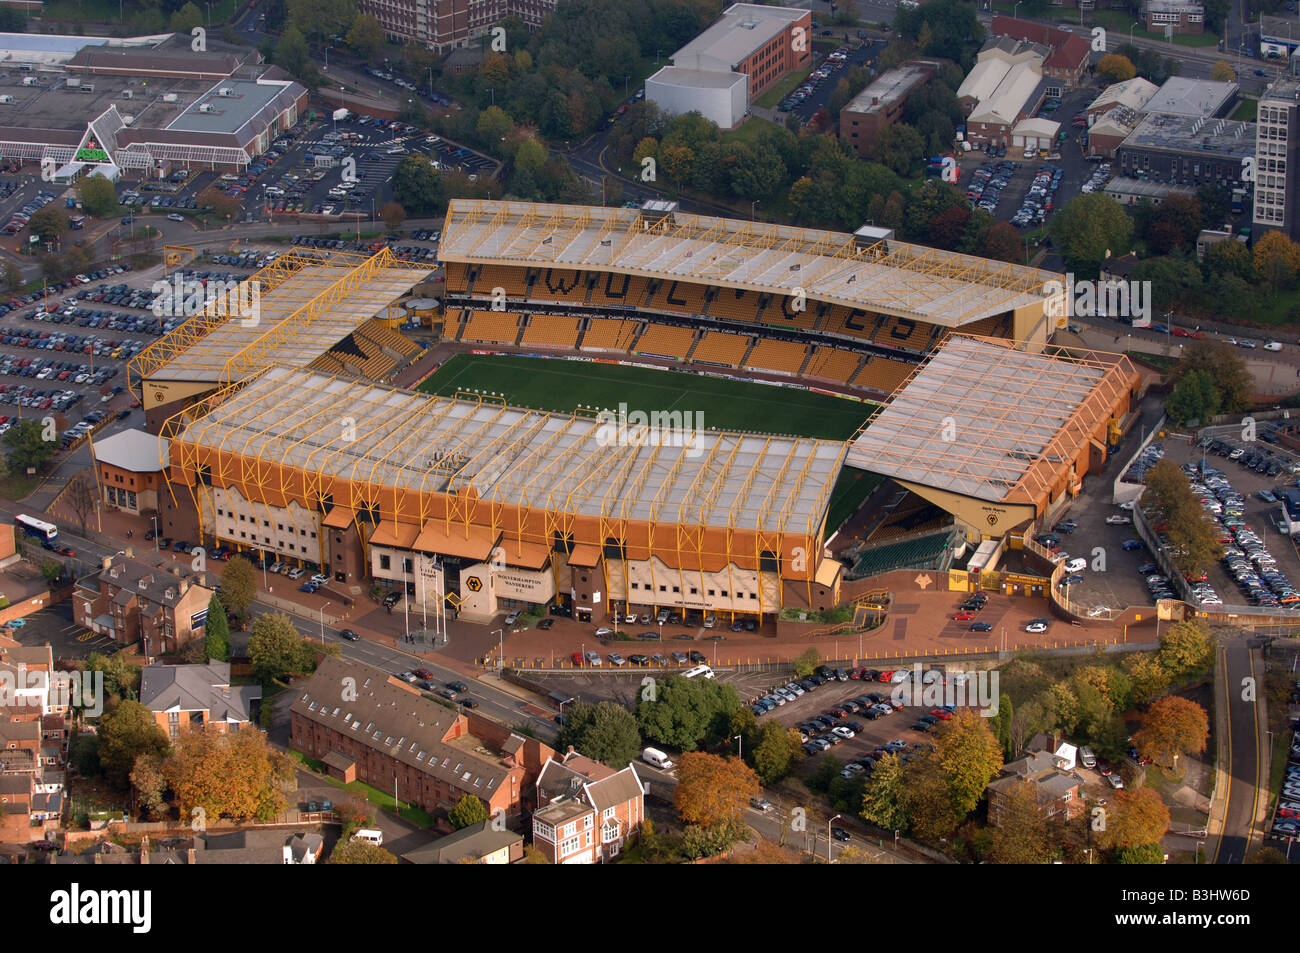 an-aerial-view-of-molineux-stadium-home-of-wolverhampton-wanderers-B3HW6D.jpg